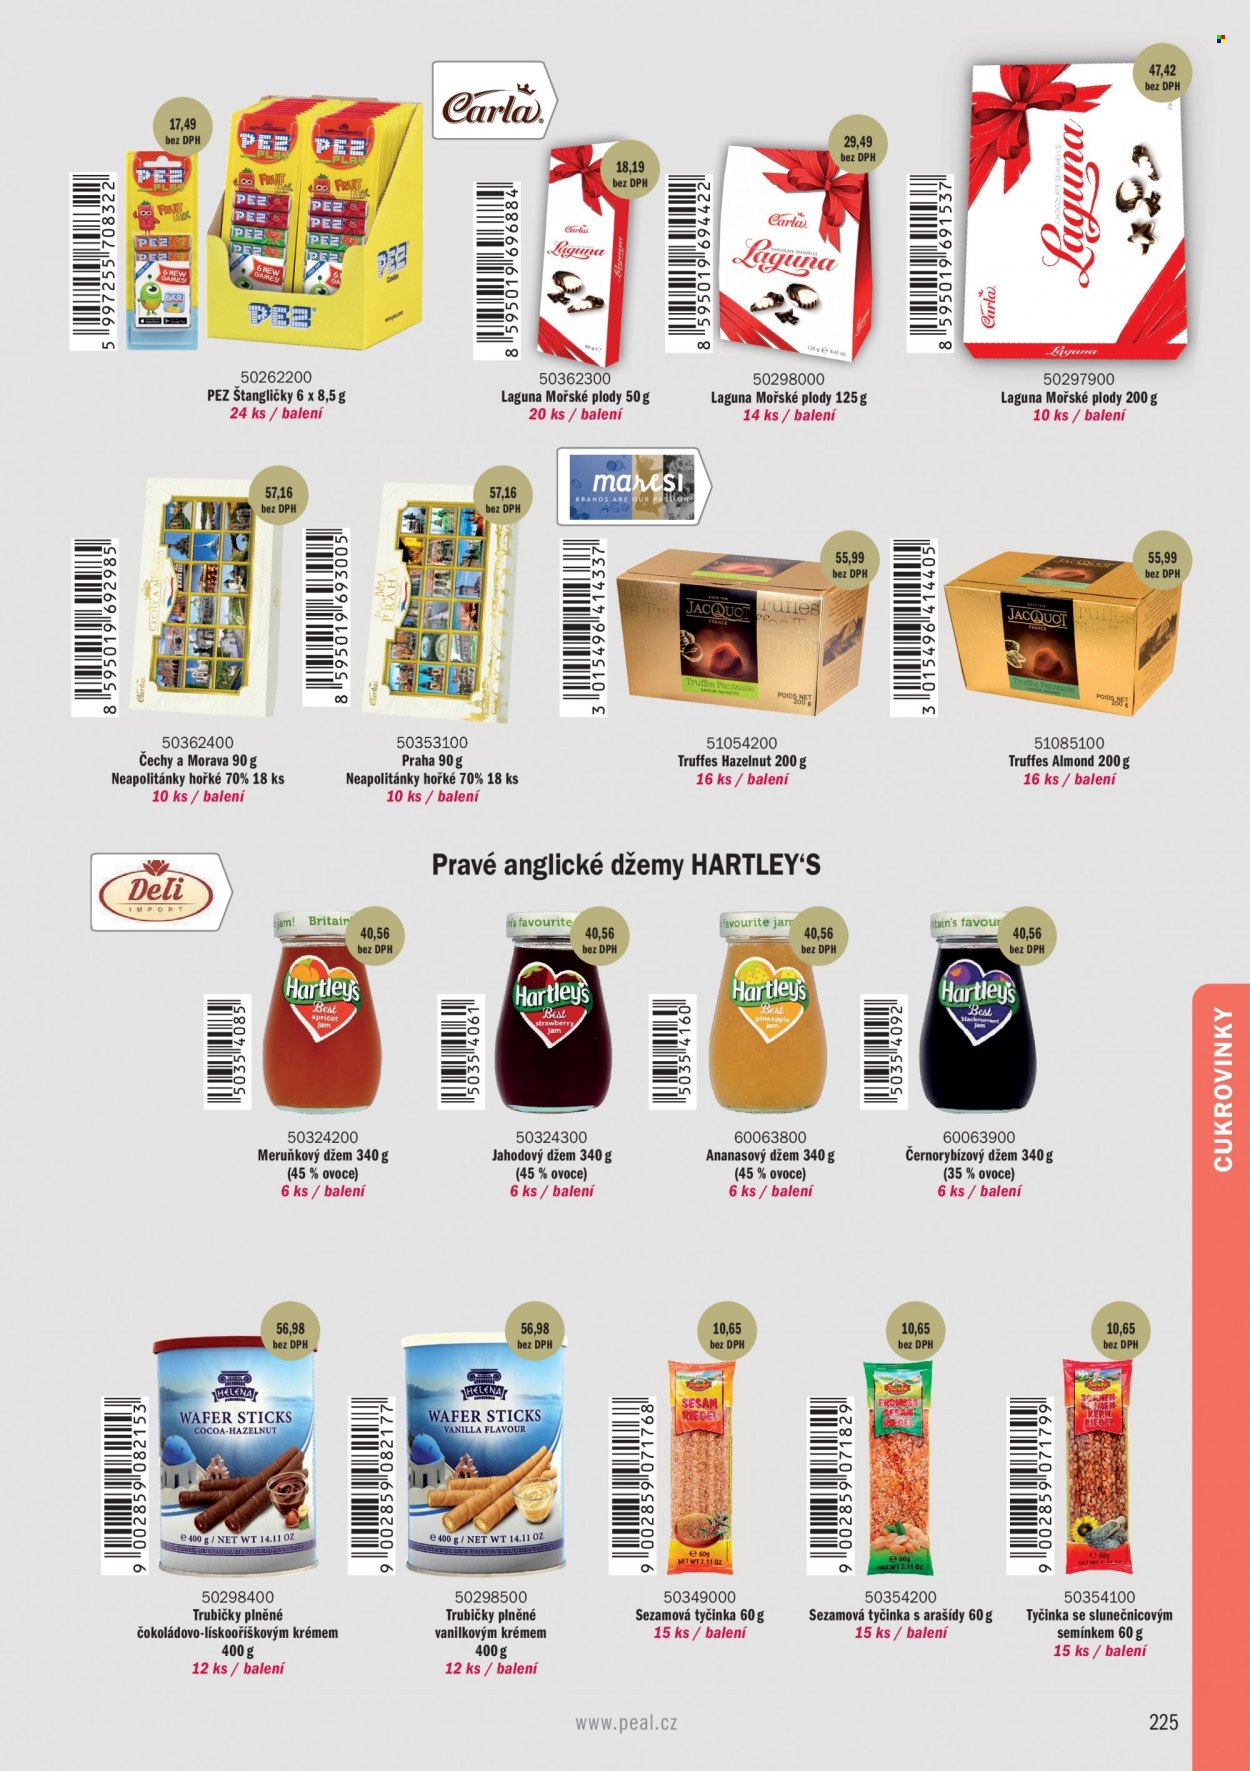 Leták PEAL - Produkty v akci - oplatky, bonbóny, sušenky, trubičky, lízátko, žvýkačky, bonboniéra. Strana 1.